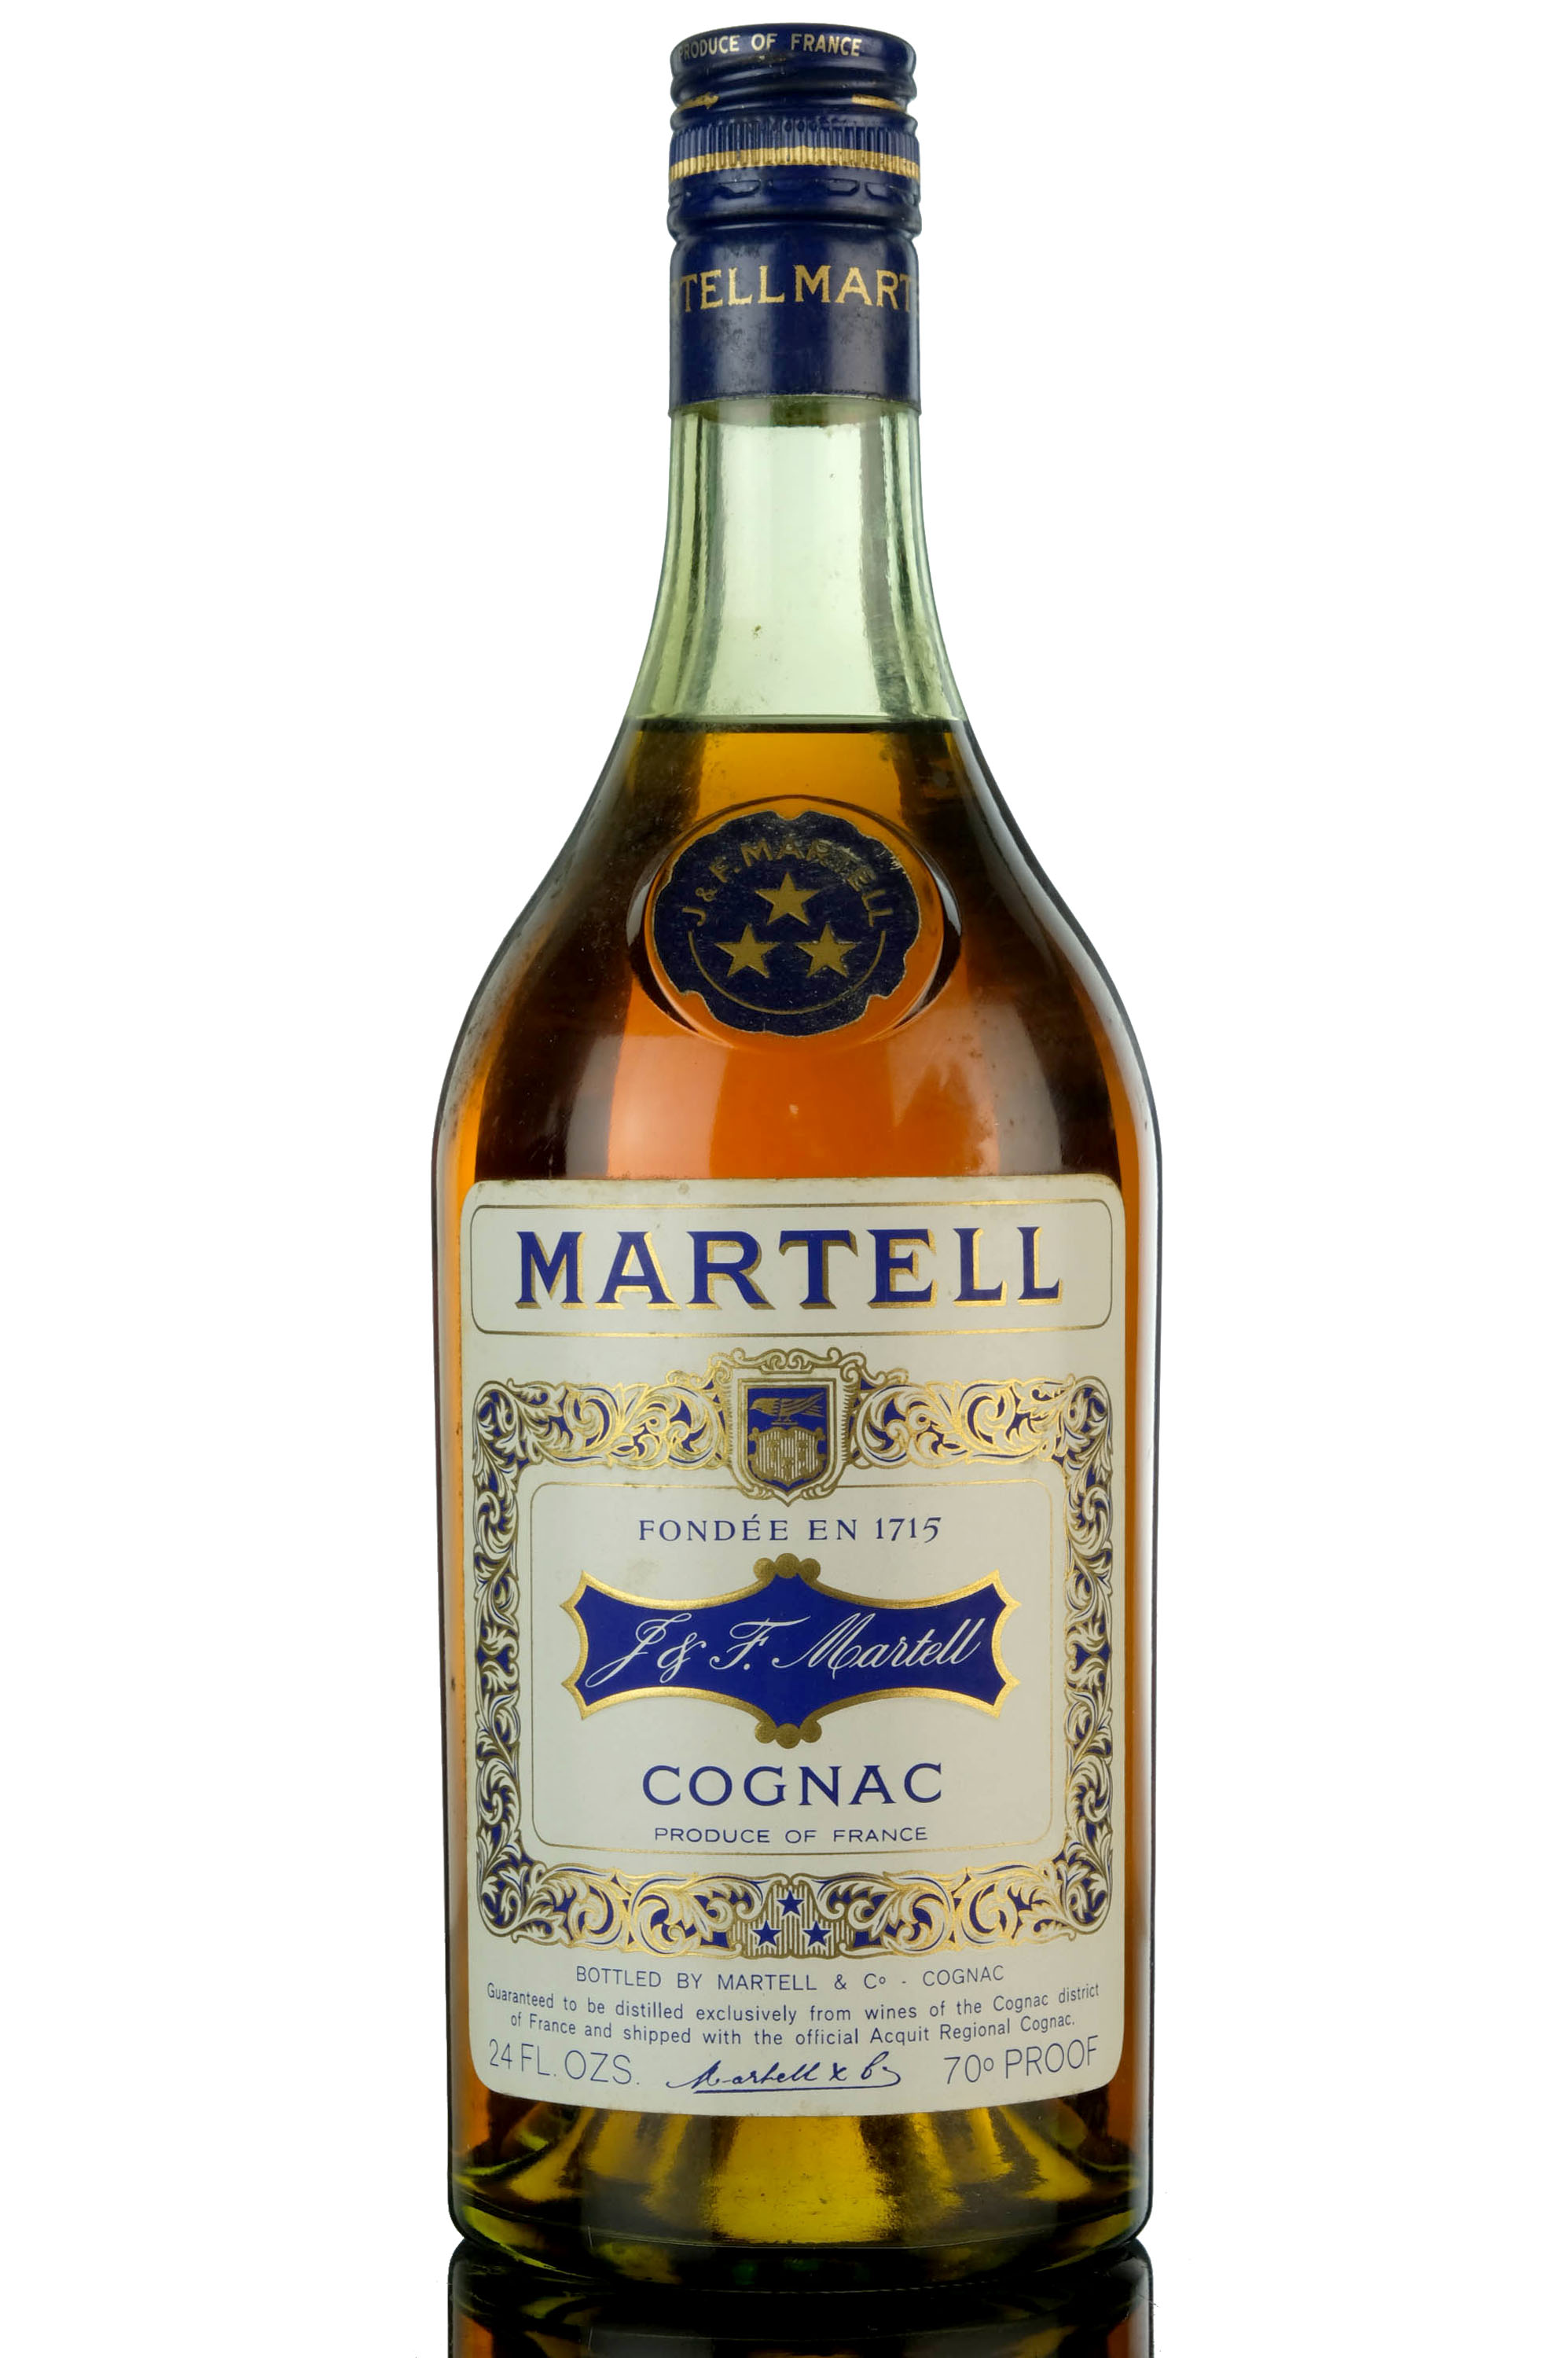 Martell 3 Star Cognac - 1970s